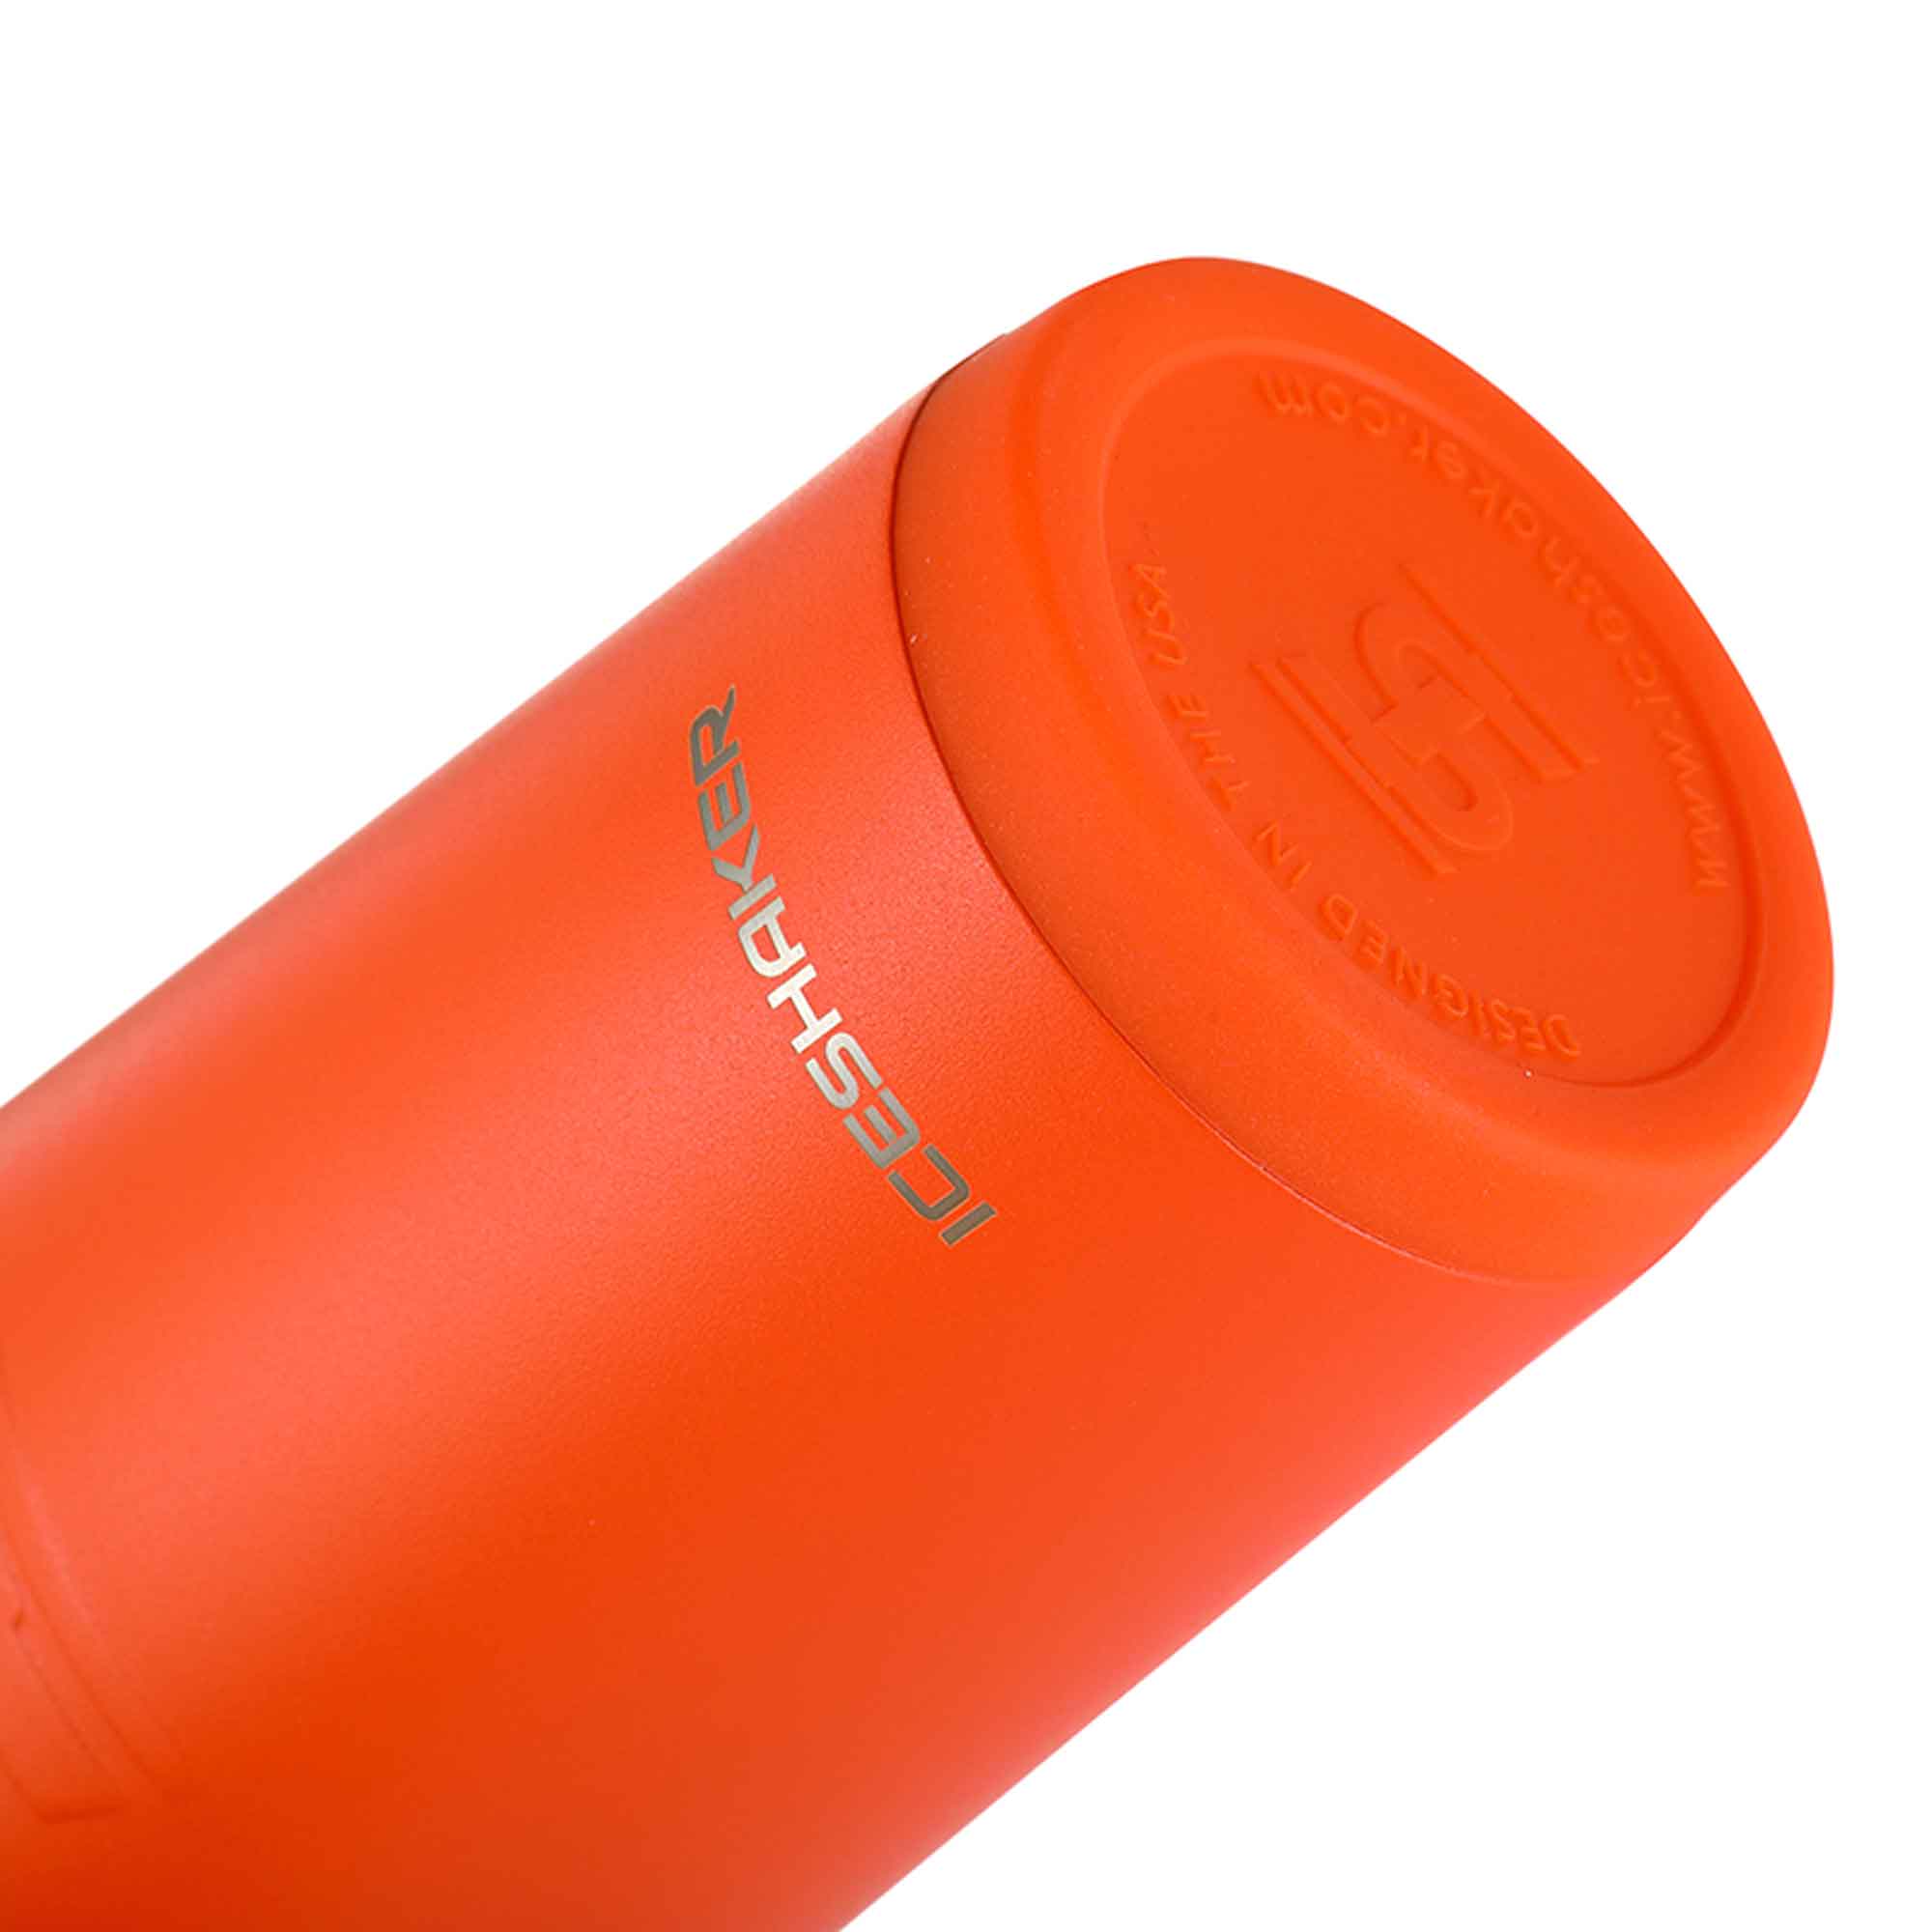 26oz Sport Bottle - Orange